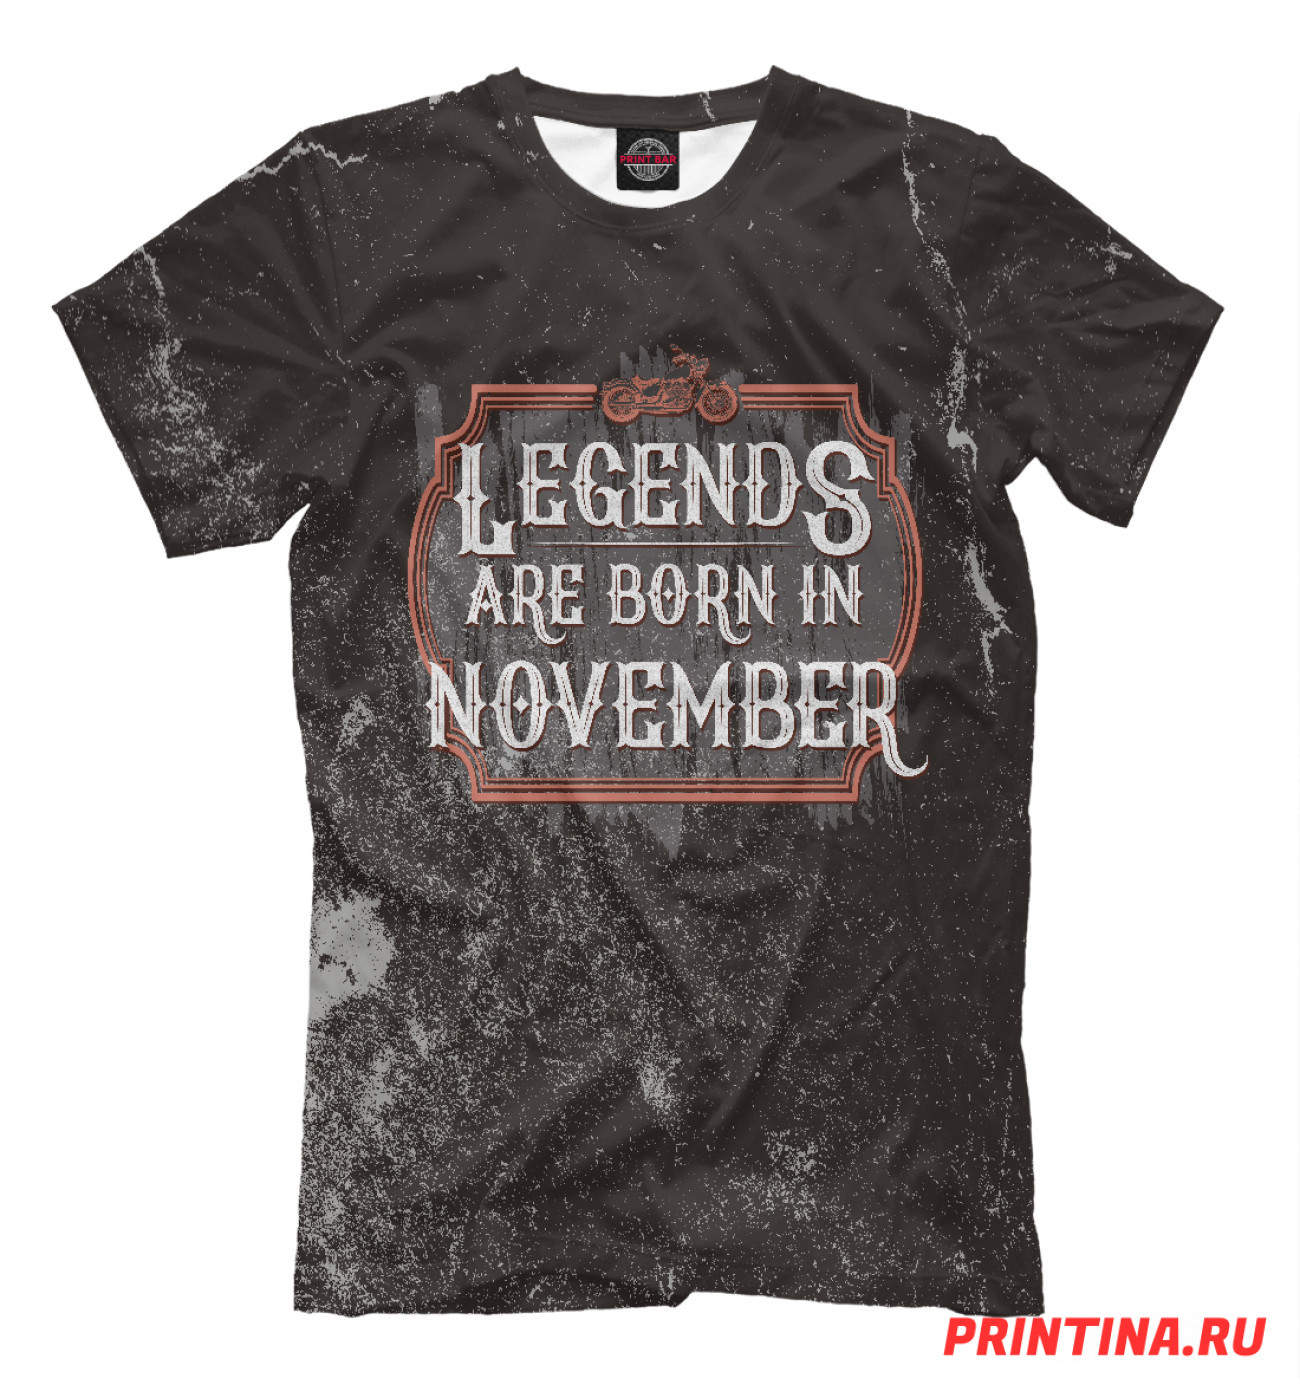 Мужская Футболка Legends Are Born In November, артикул: NBR-978403-fut-2